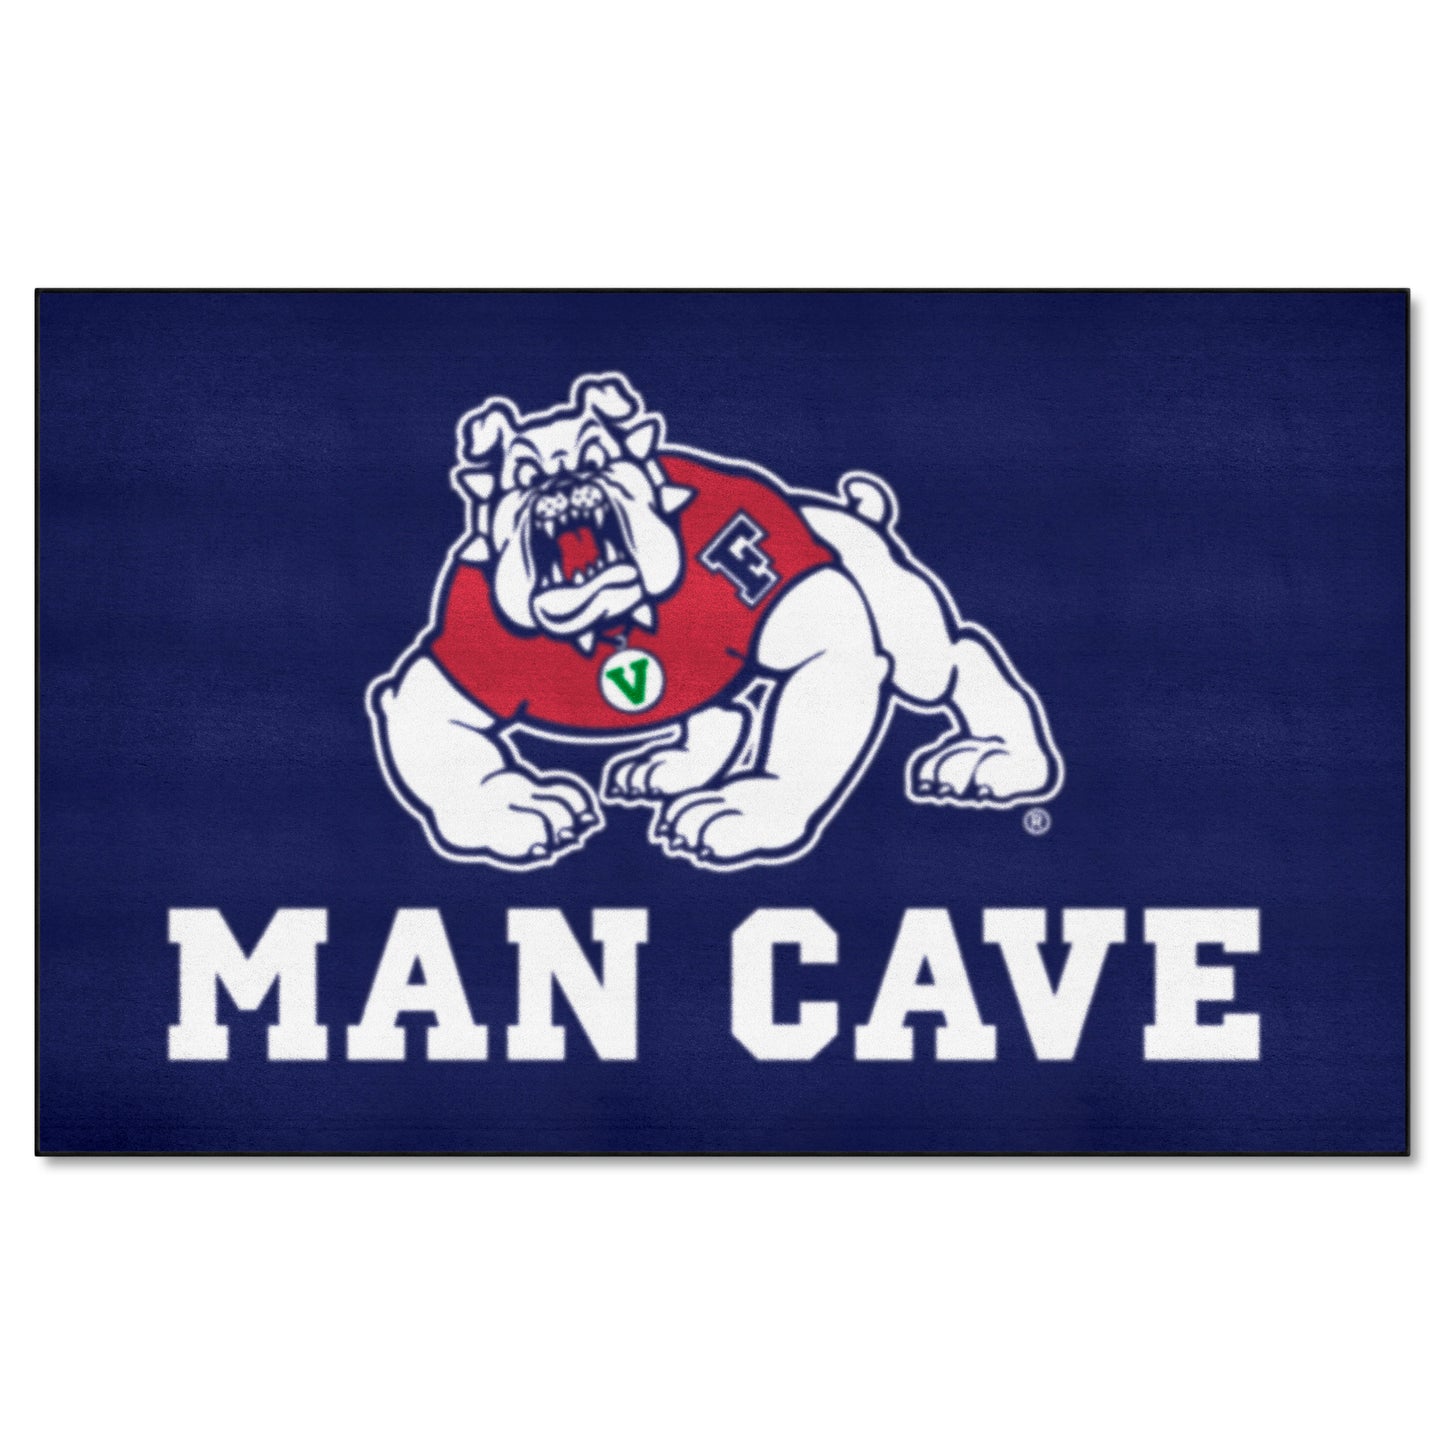 Fresno State Bulldogs Man Cave Ulti-Mat Rug - 5ft. x 8ft. - Navy